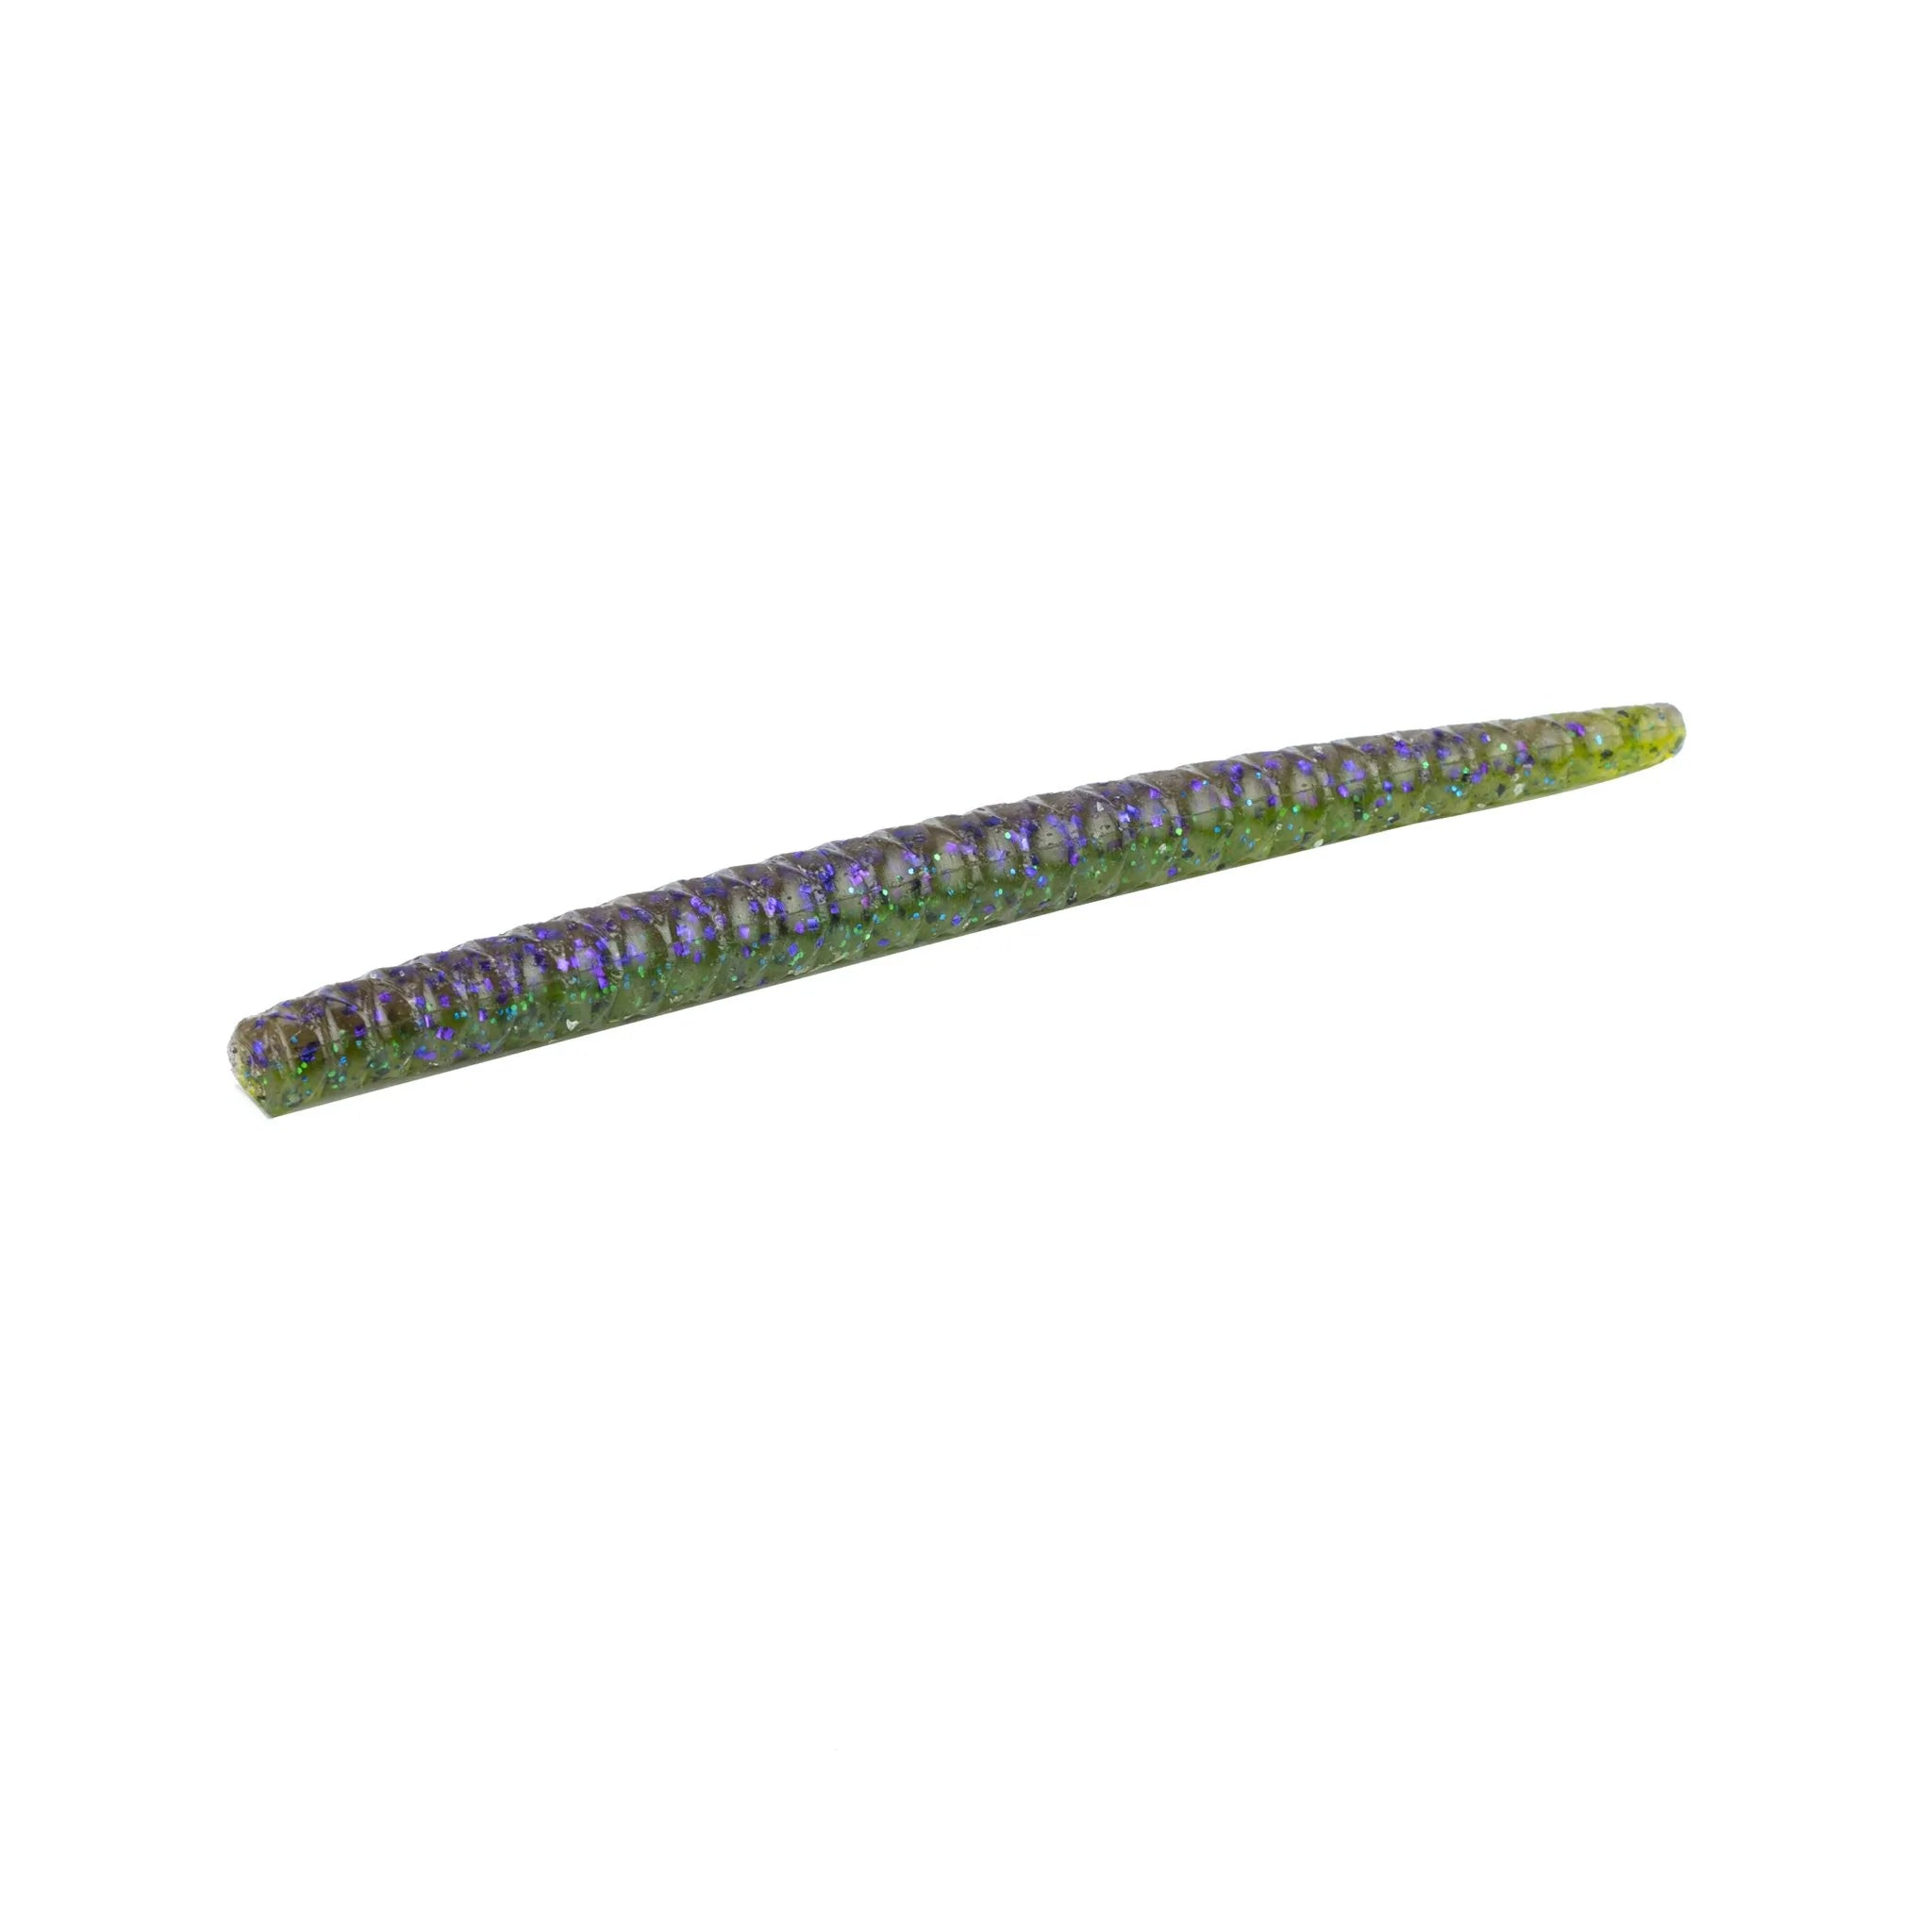 Buy grass-candy 6TH SENSE CLOUT 5.4 STICK BAIT